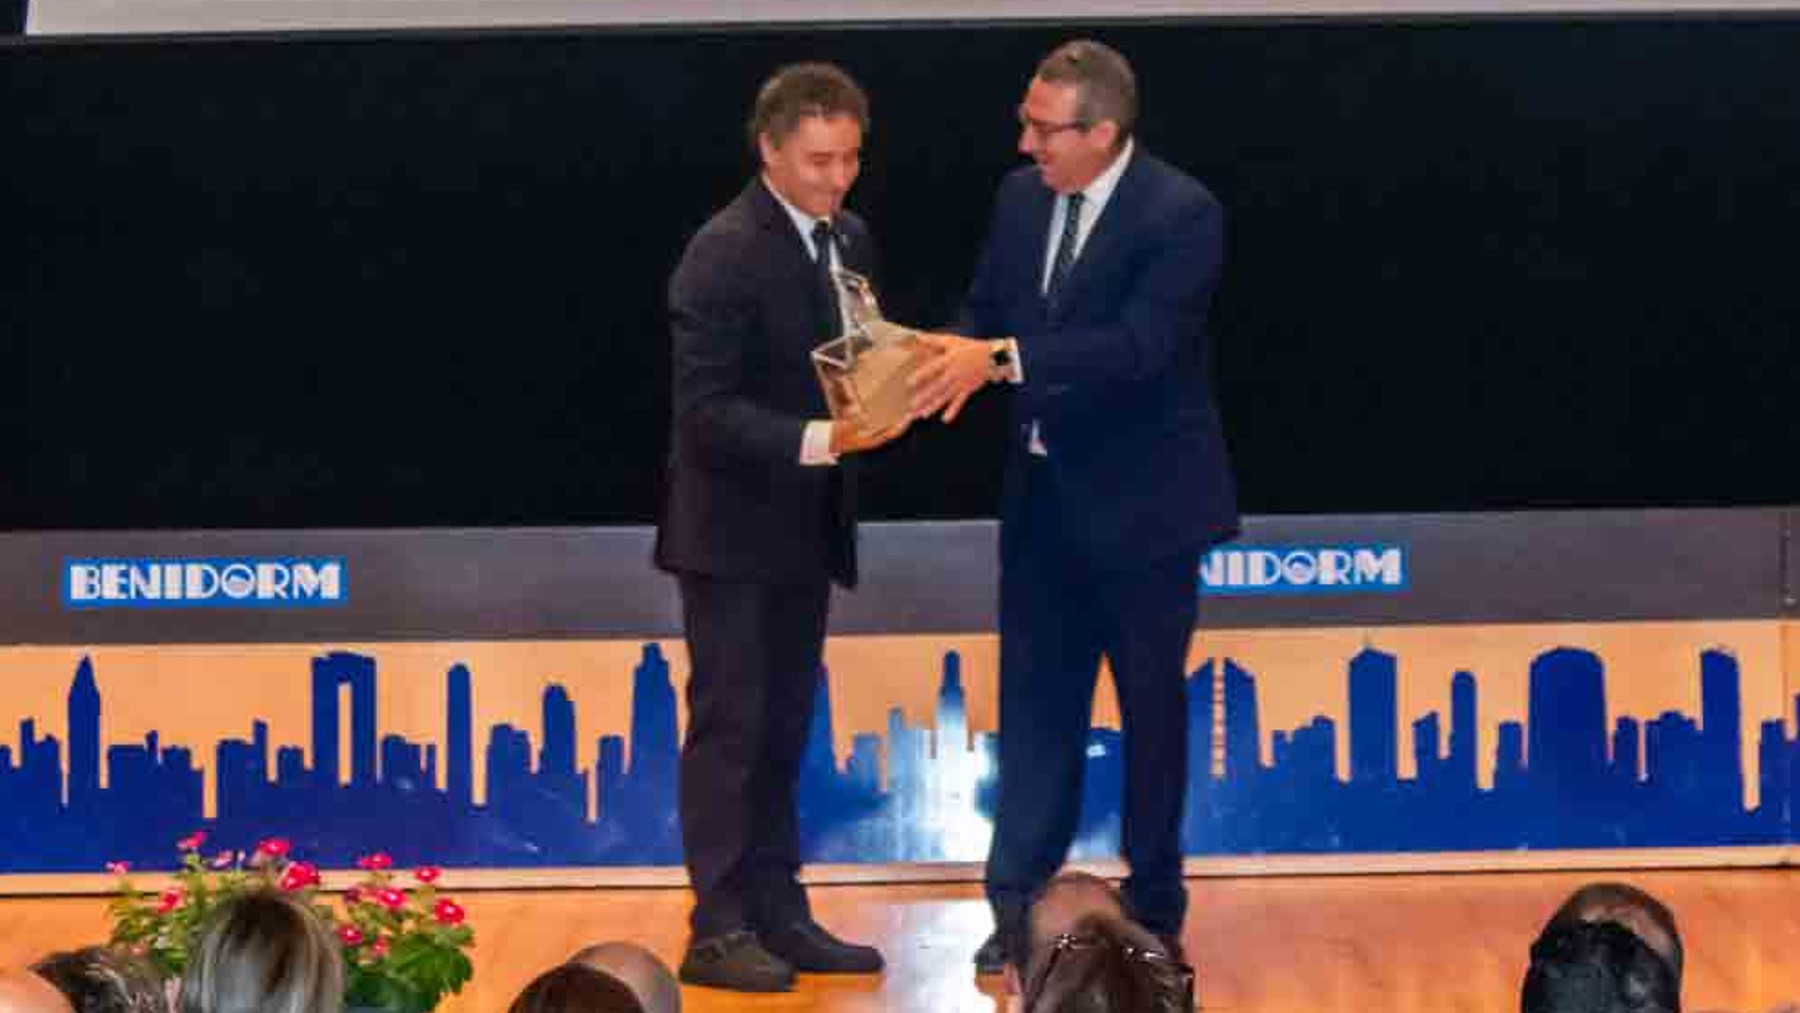 El alcalde de Benidorm el ‘popular’ Toni Pérez, entrega su galardón a Francesc Colomer.